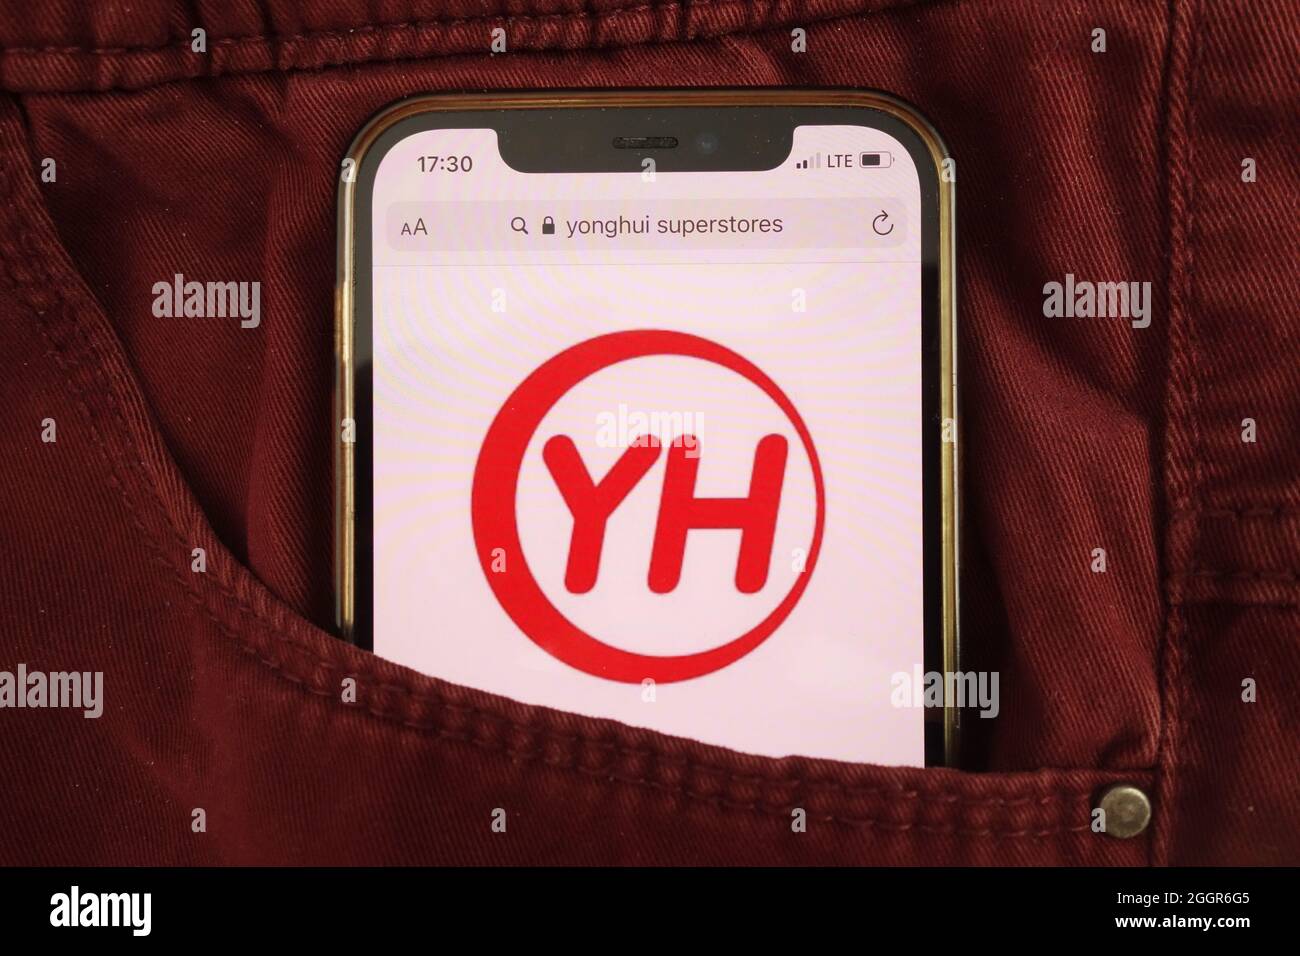 KONSKIE, POLAND - August 17, 2021: Yonghui Superstores logo displayed on mobile phone hidden in jeans pocket Stock Photo